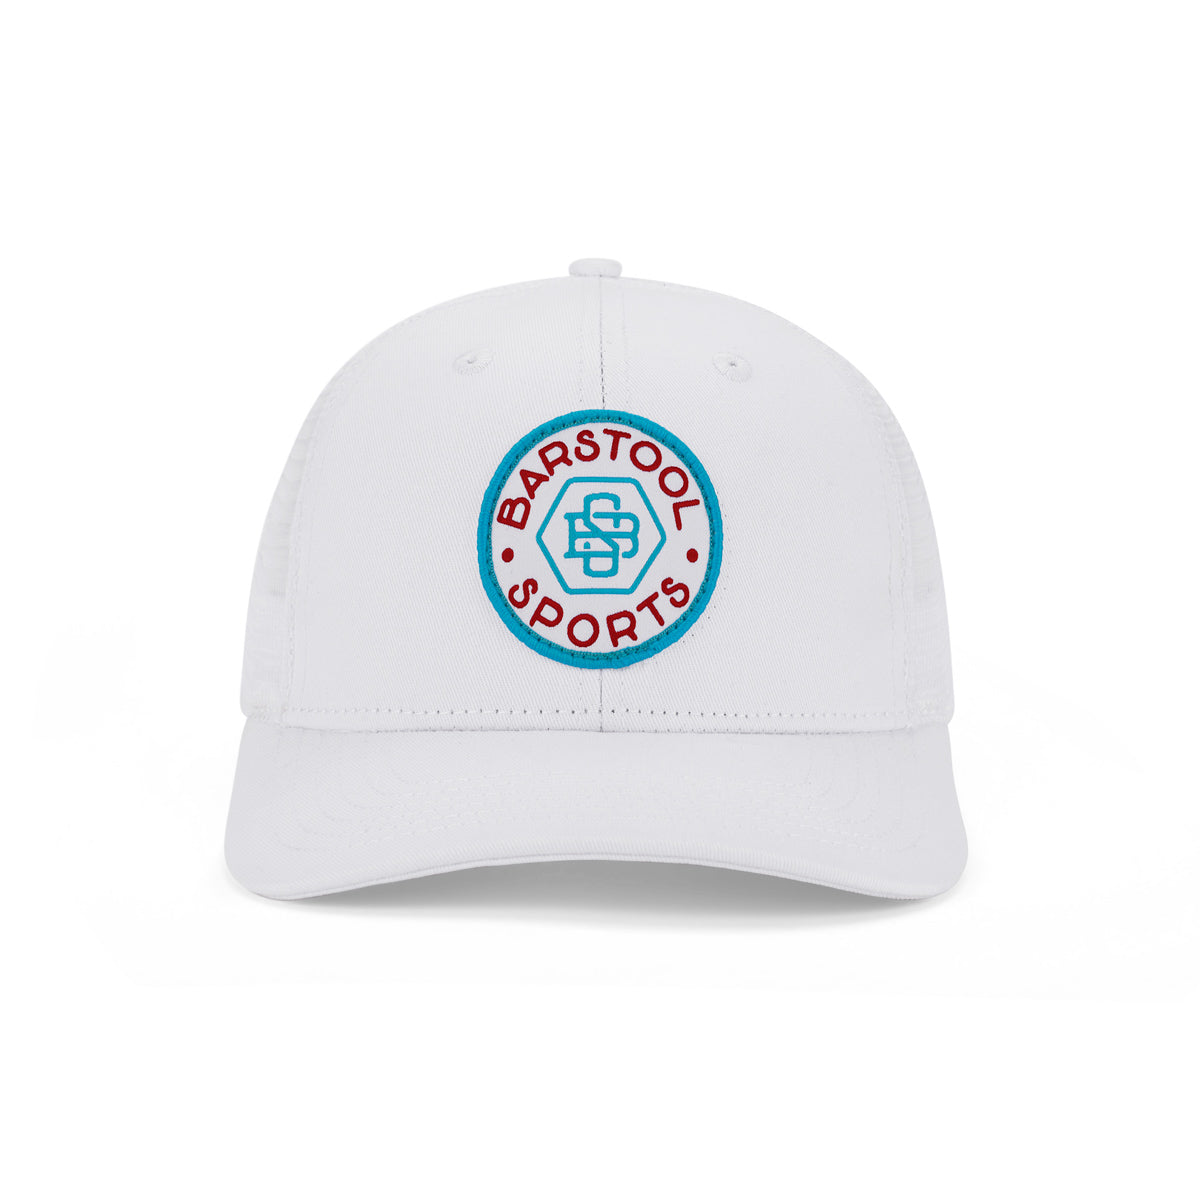 Barstool Sports Retro Trucker Hat-Hats-Barstool Sports-White-One Size-Barstool Sports